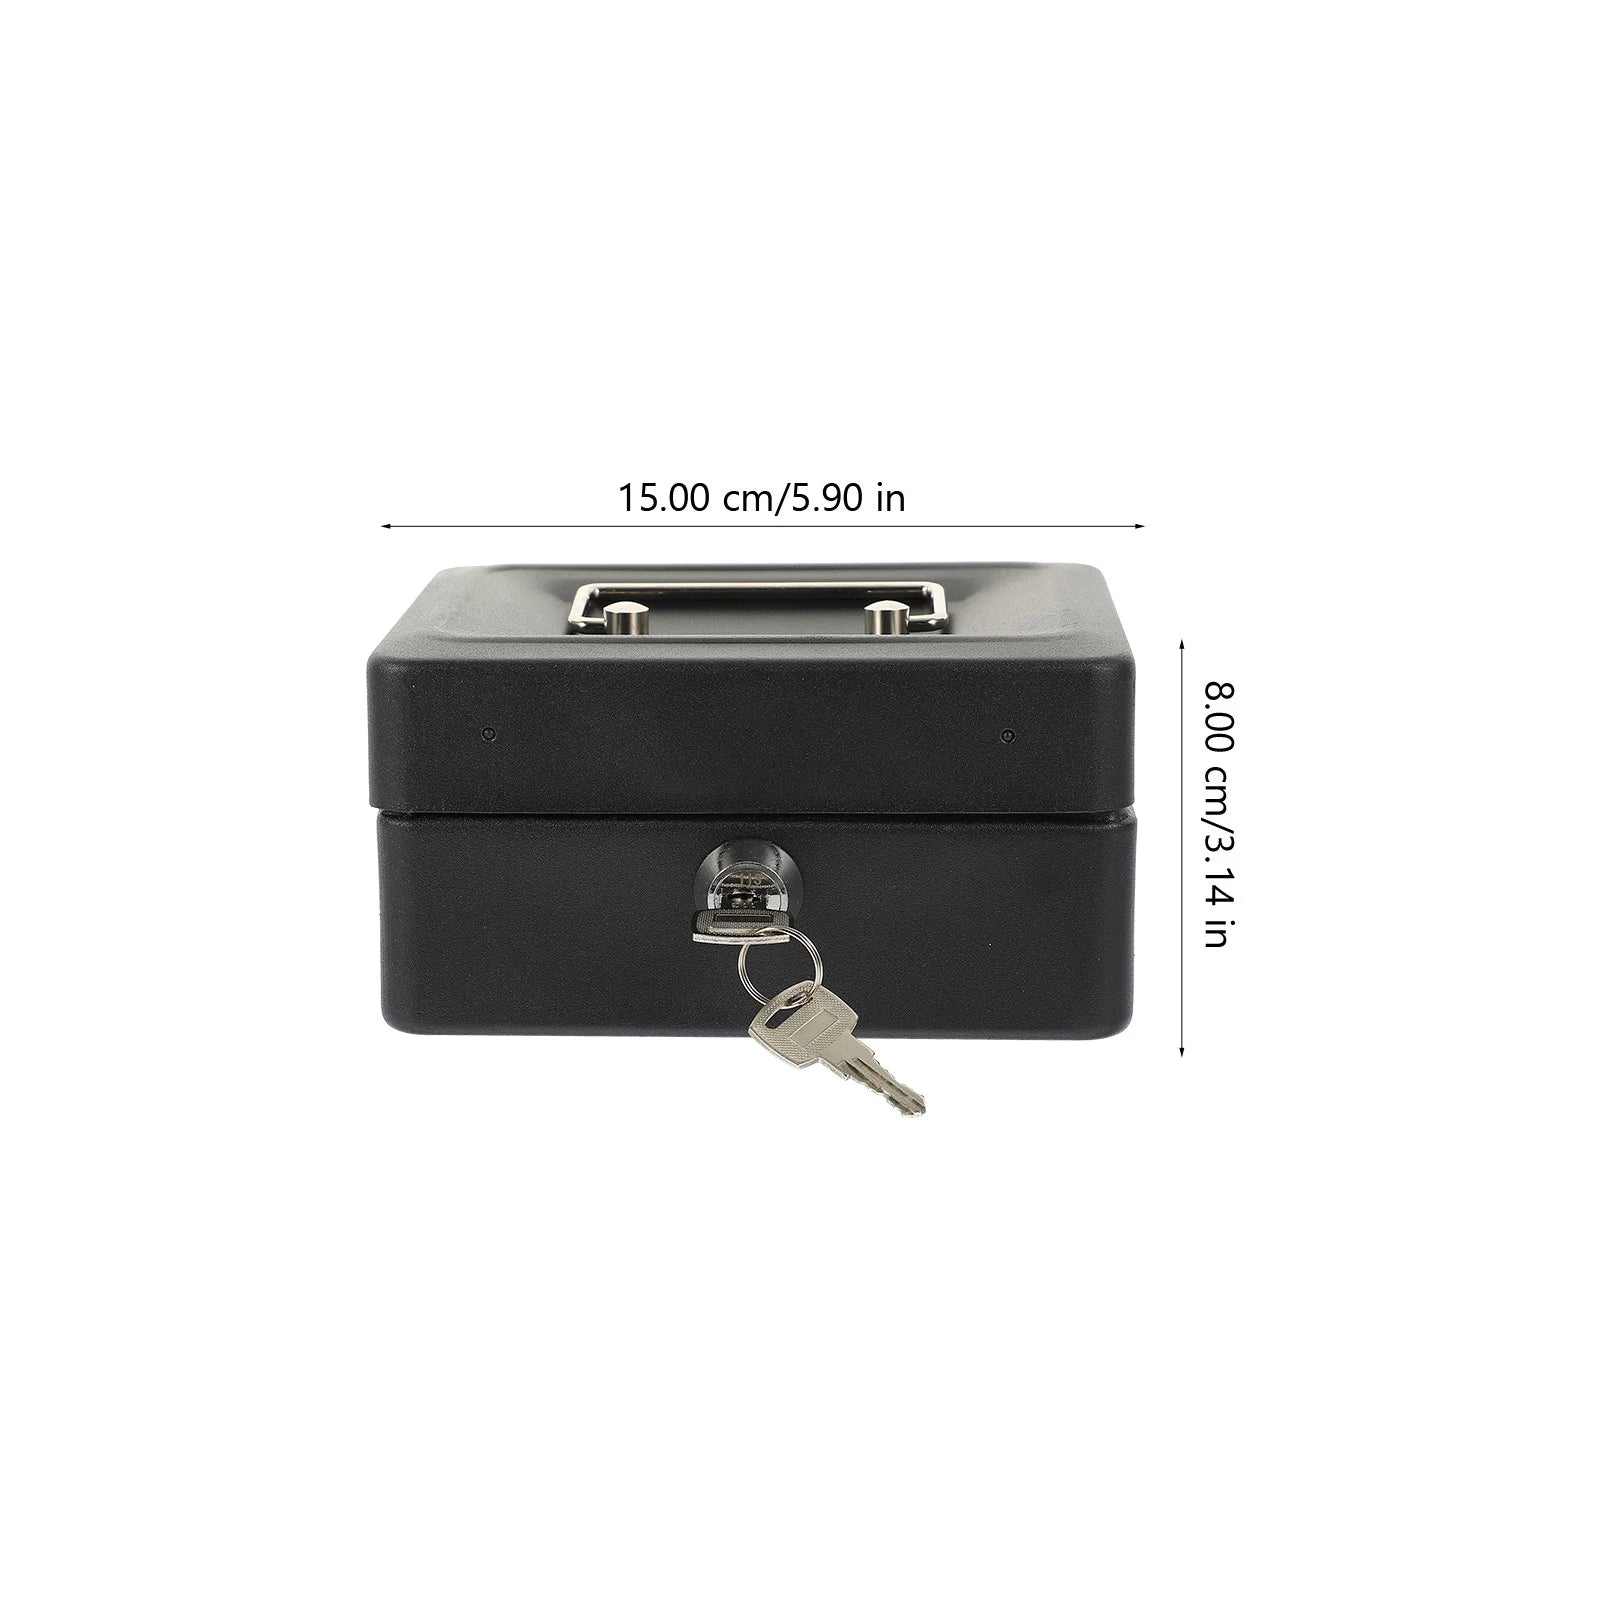 Locking Large Cash Box Small Safe Lock Box Small Storage Holder Case for